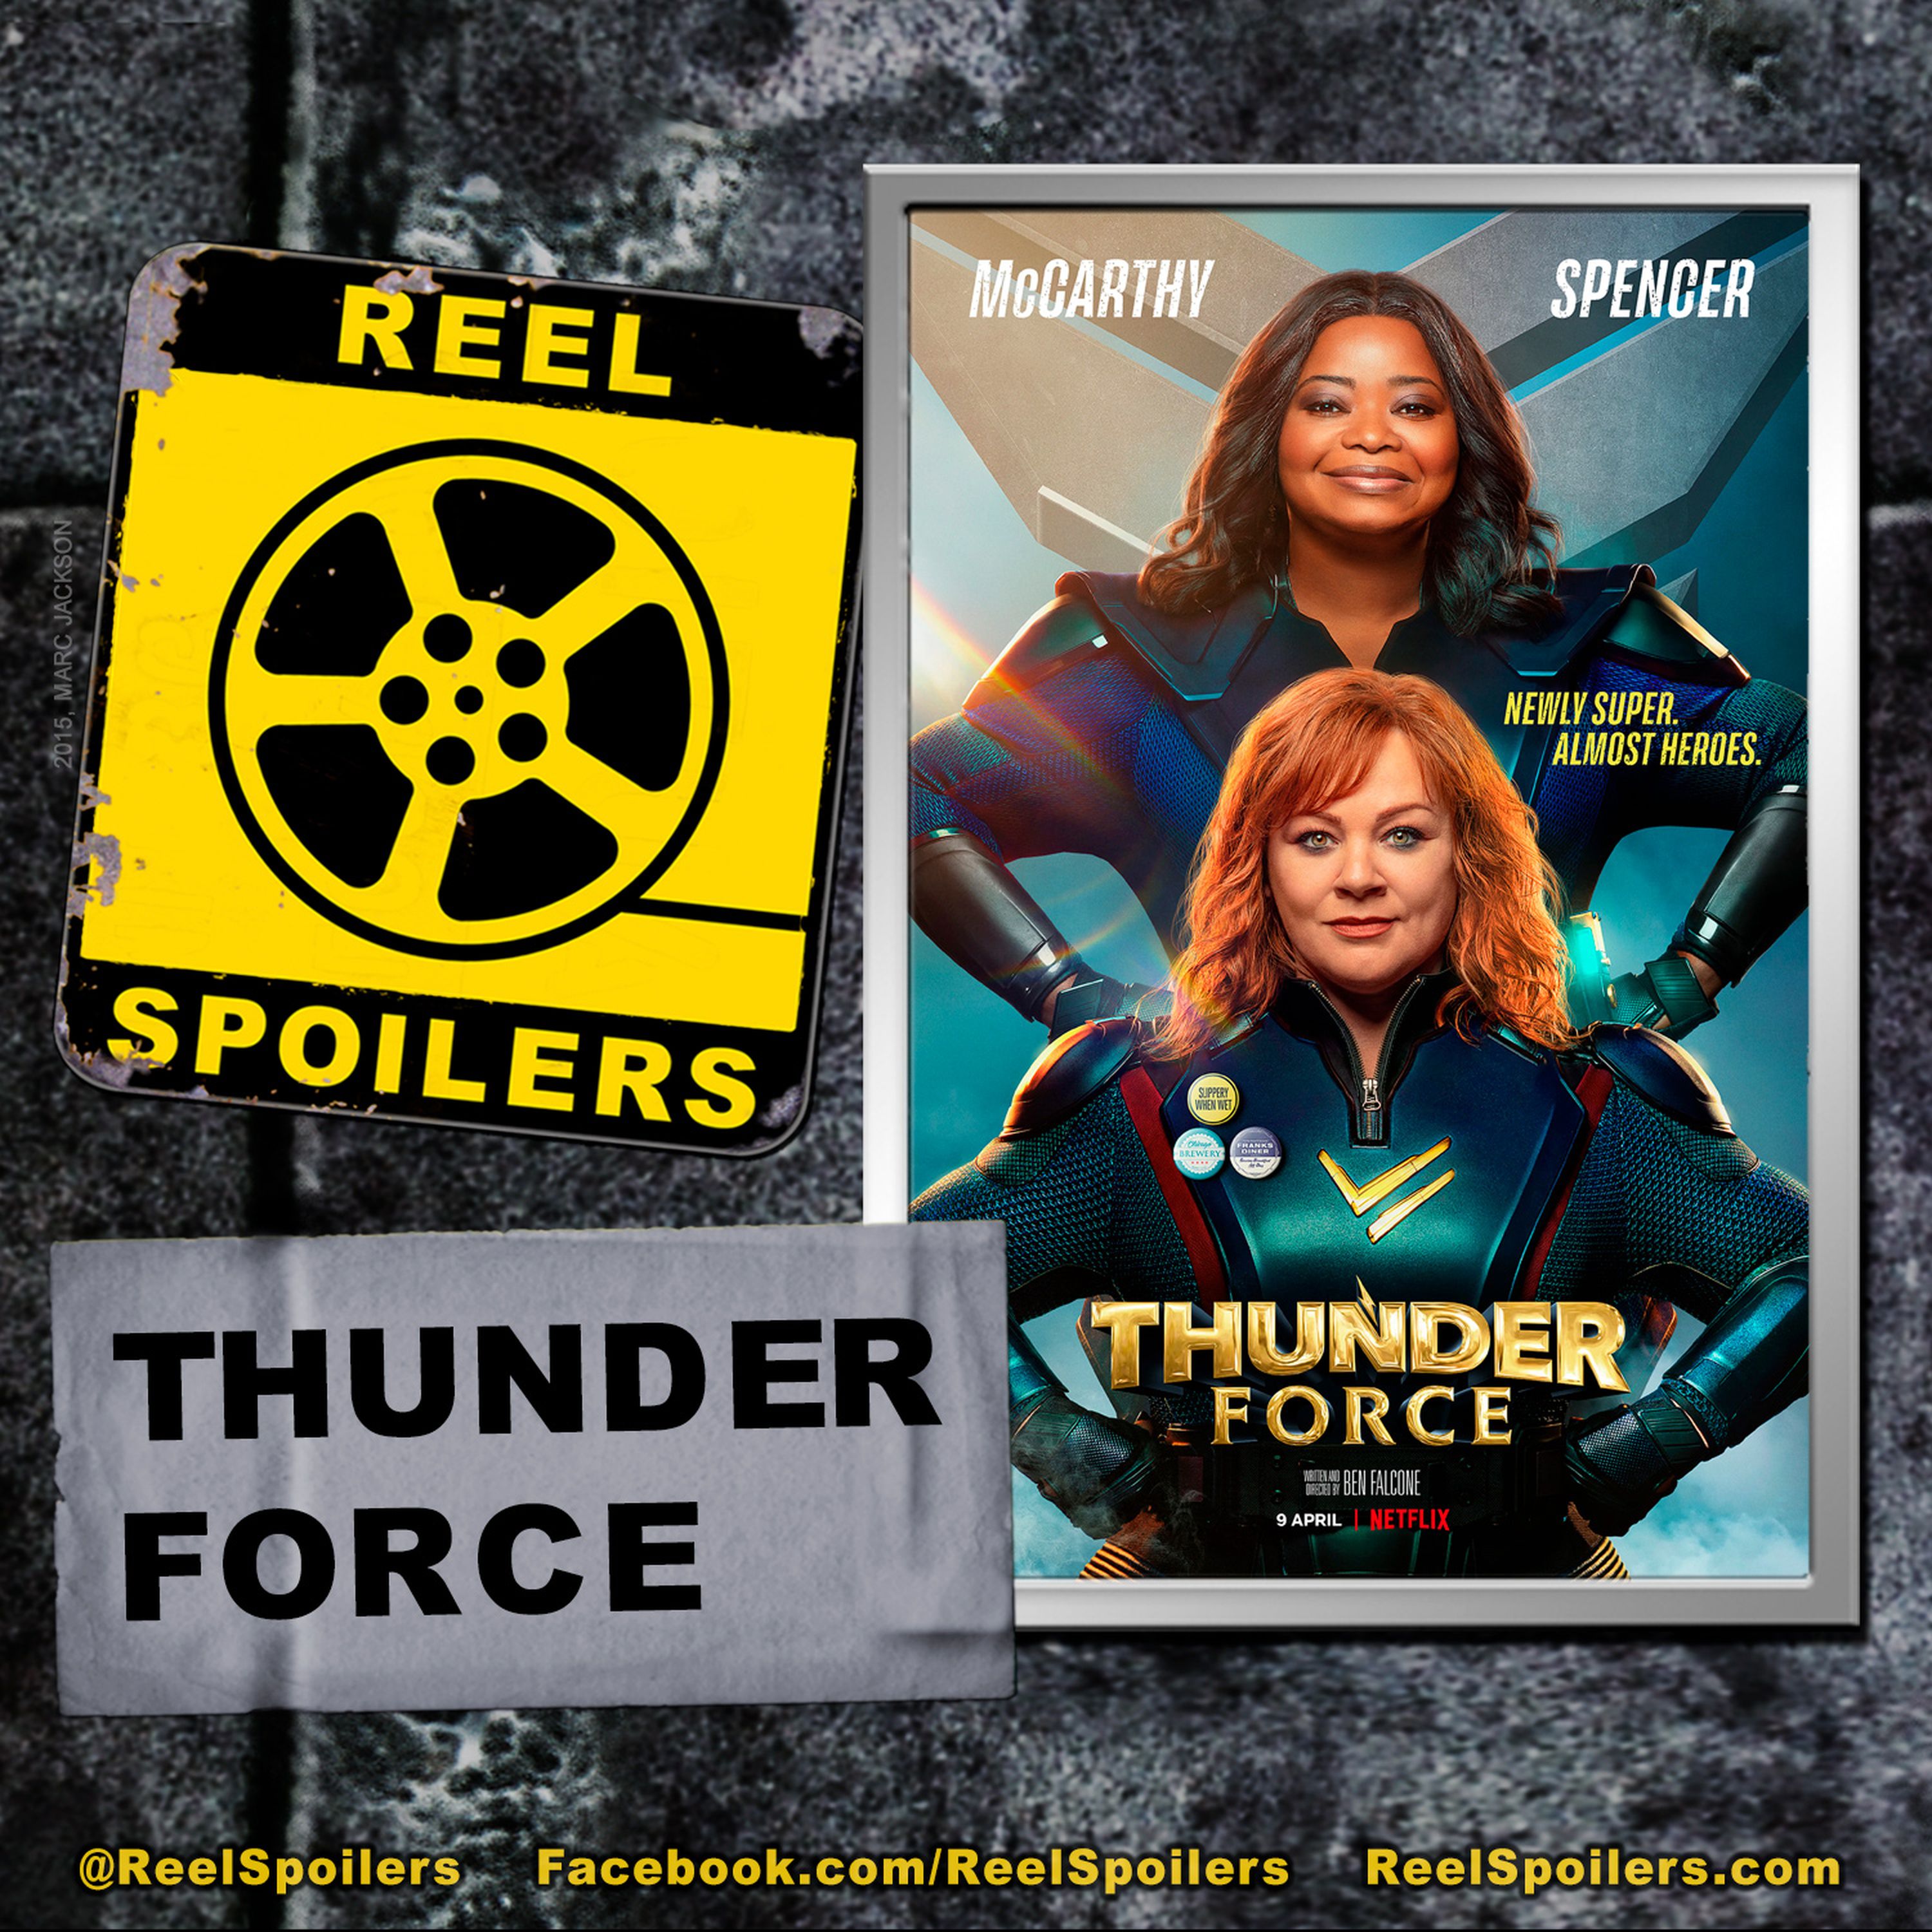 THUNDER FORCE Starring Octavia Spencer, Melissa McCarthy, Jason Bateman Image